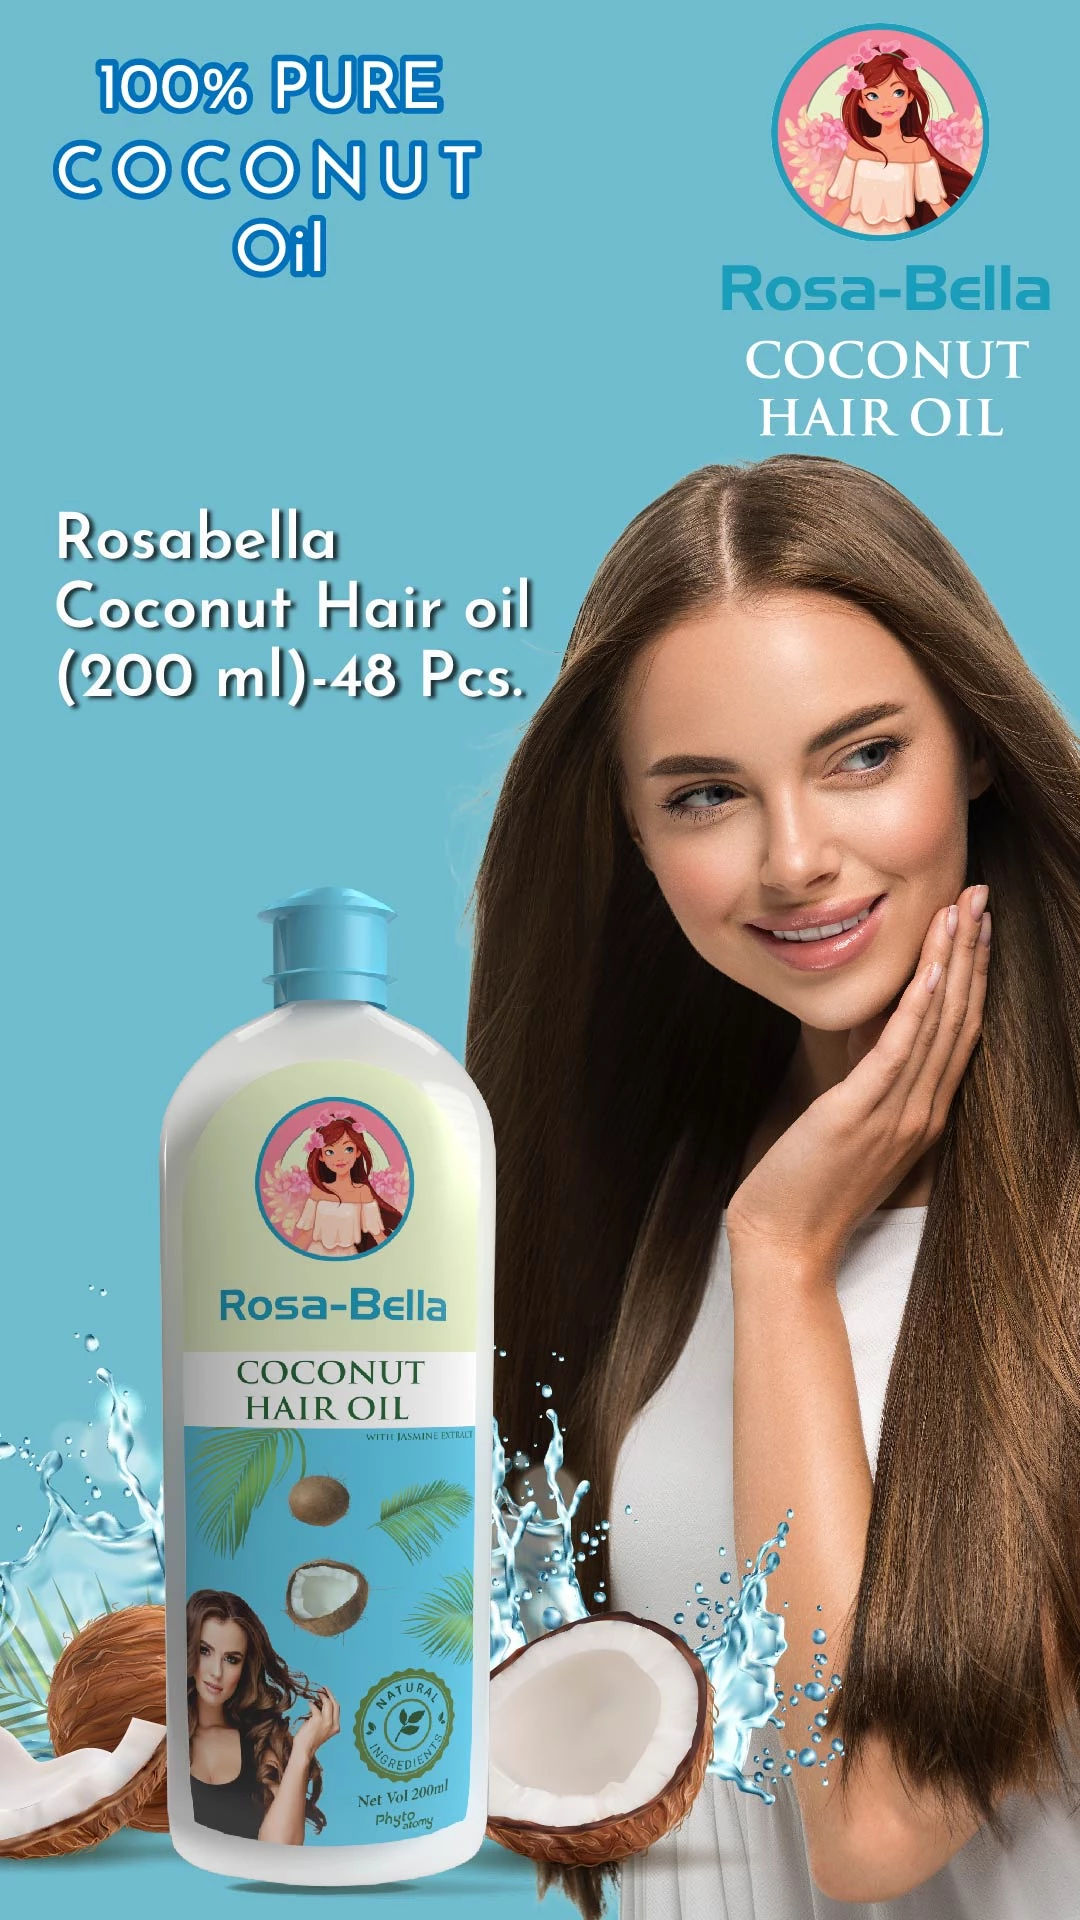 RBV B2B Rosabella Coconut Hair oil (200 ml)-48 Pcs.